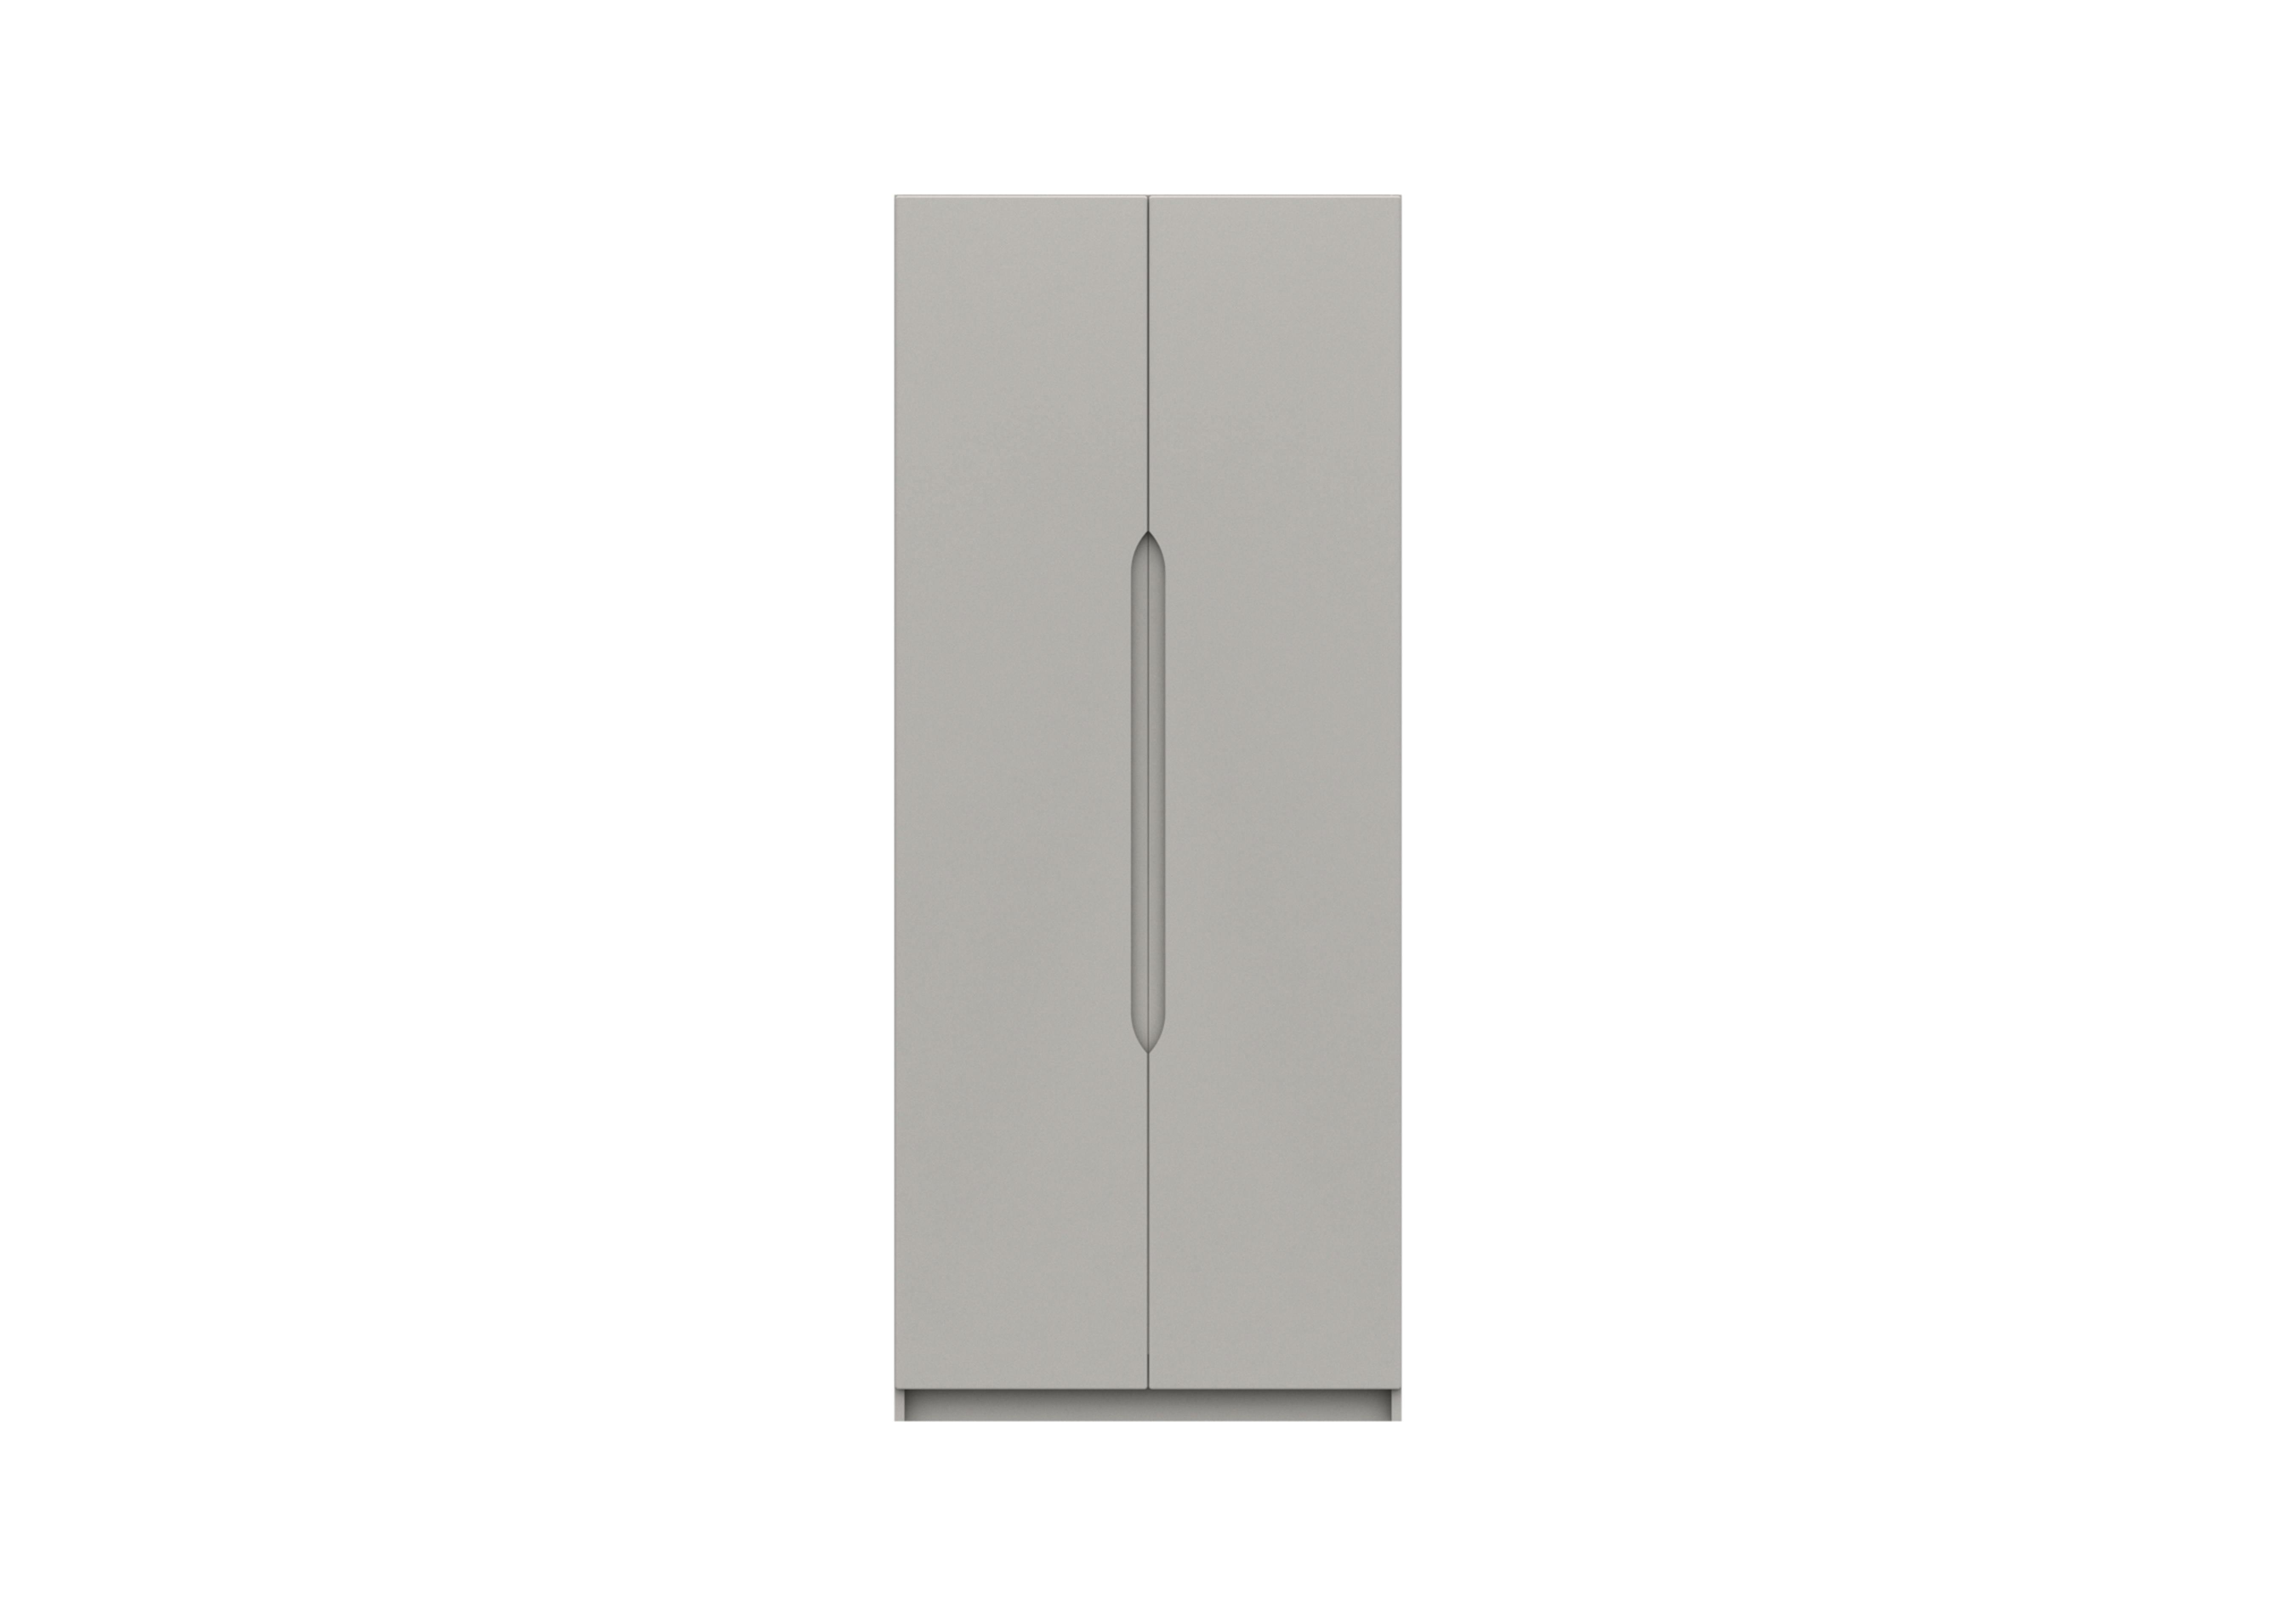 St Pancras 2 Door Wardrobe in Light Grey Gloss on Furniture Village